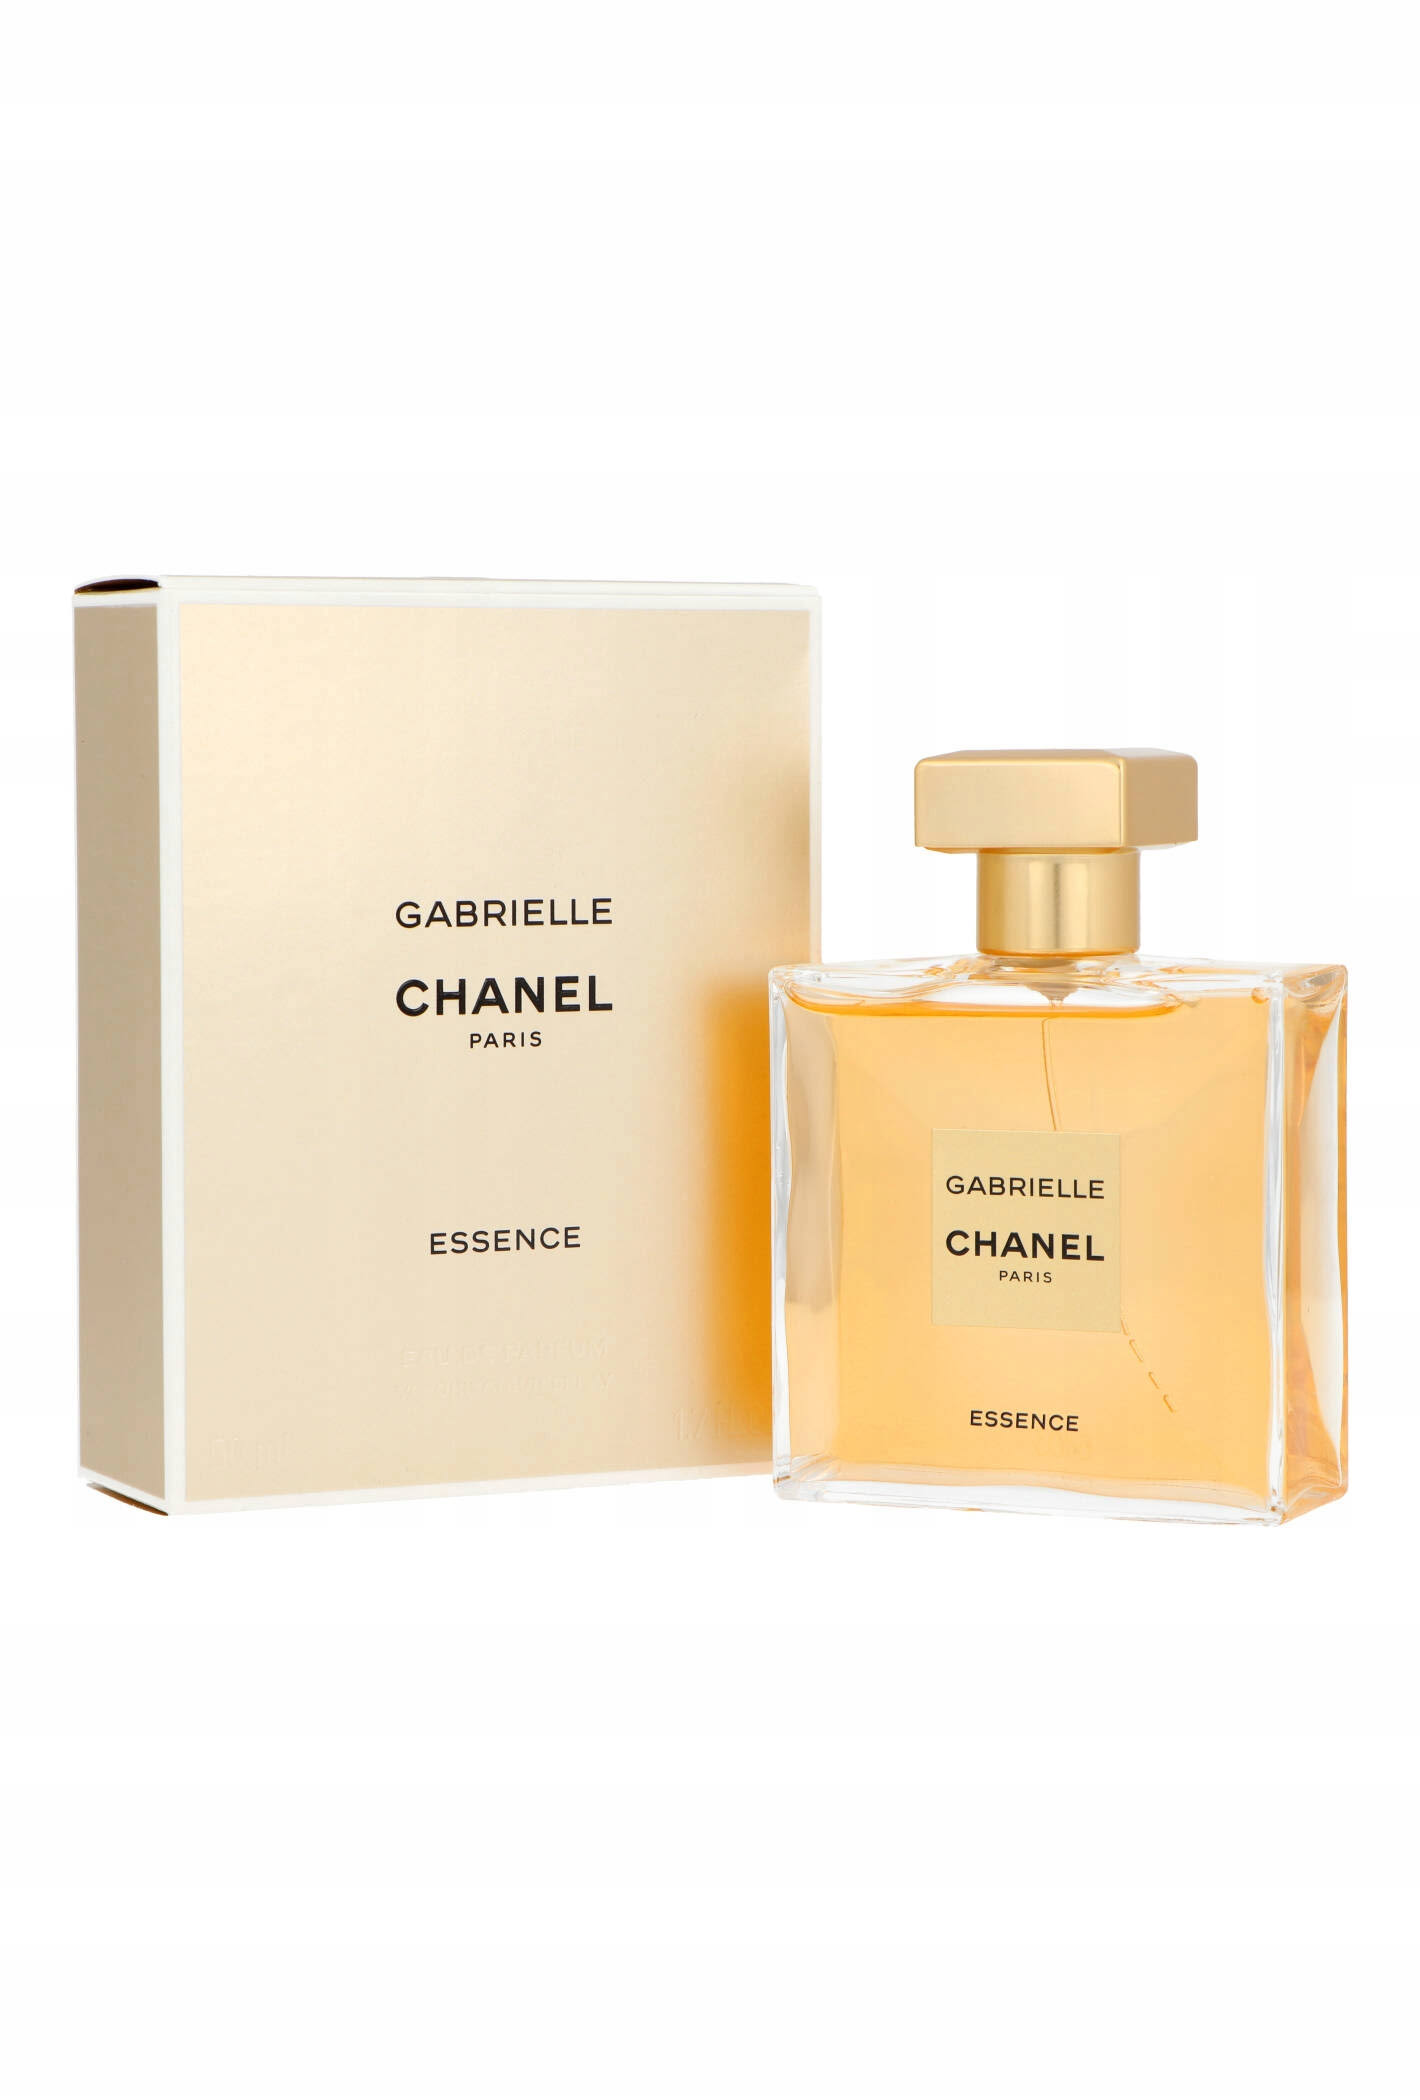 Chanel Gabrielle Essence Eau de Parfum Spray - 50ml